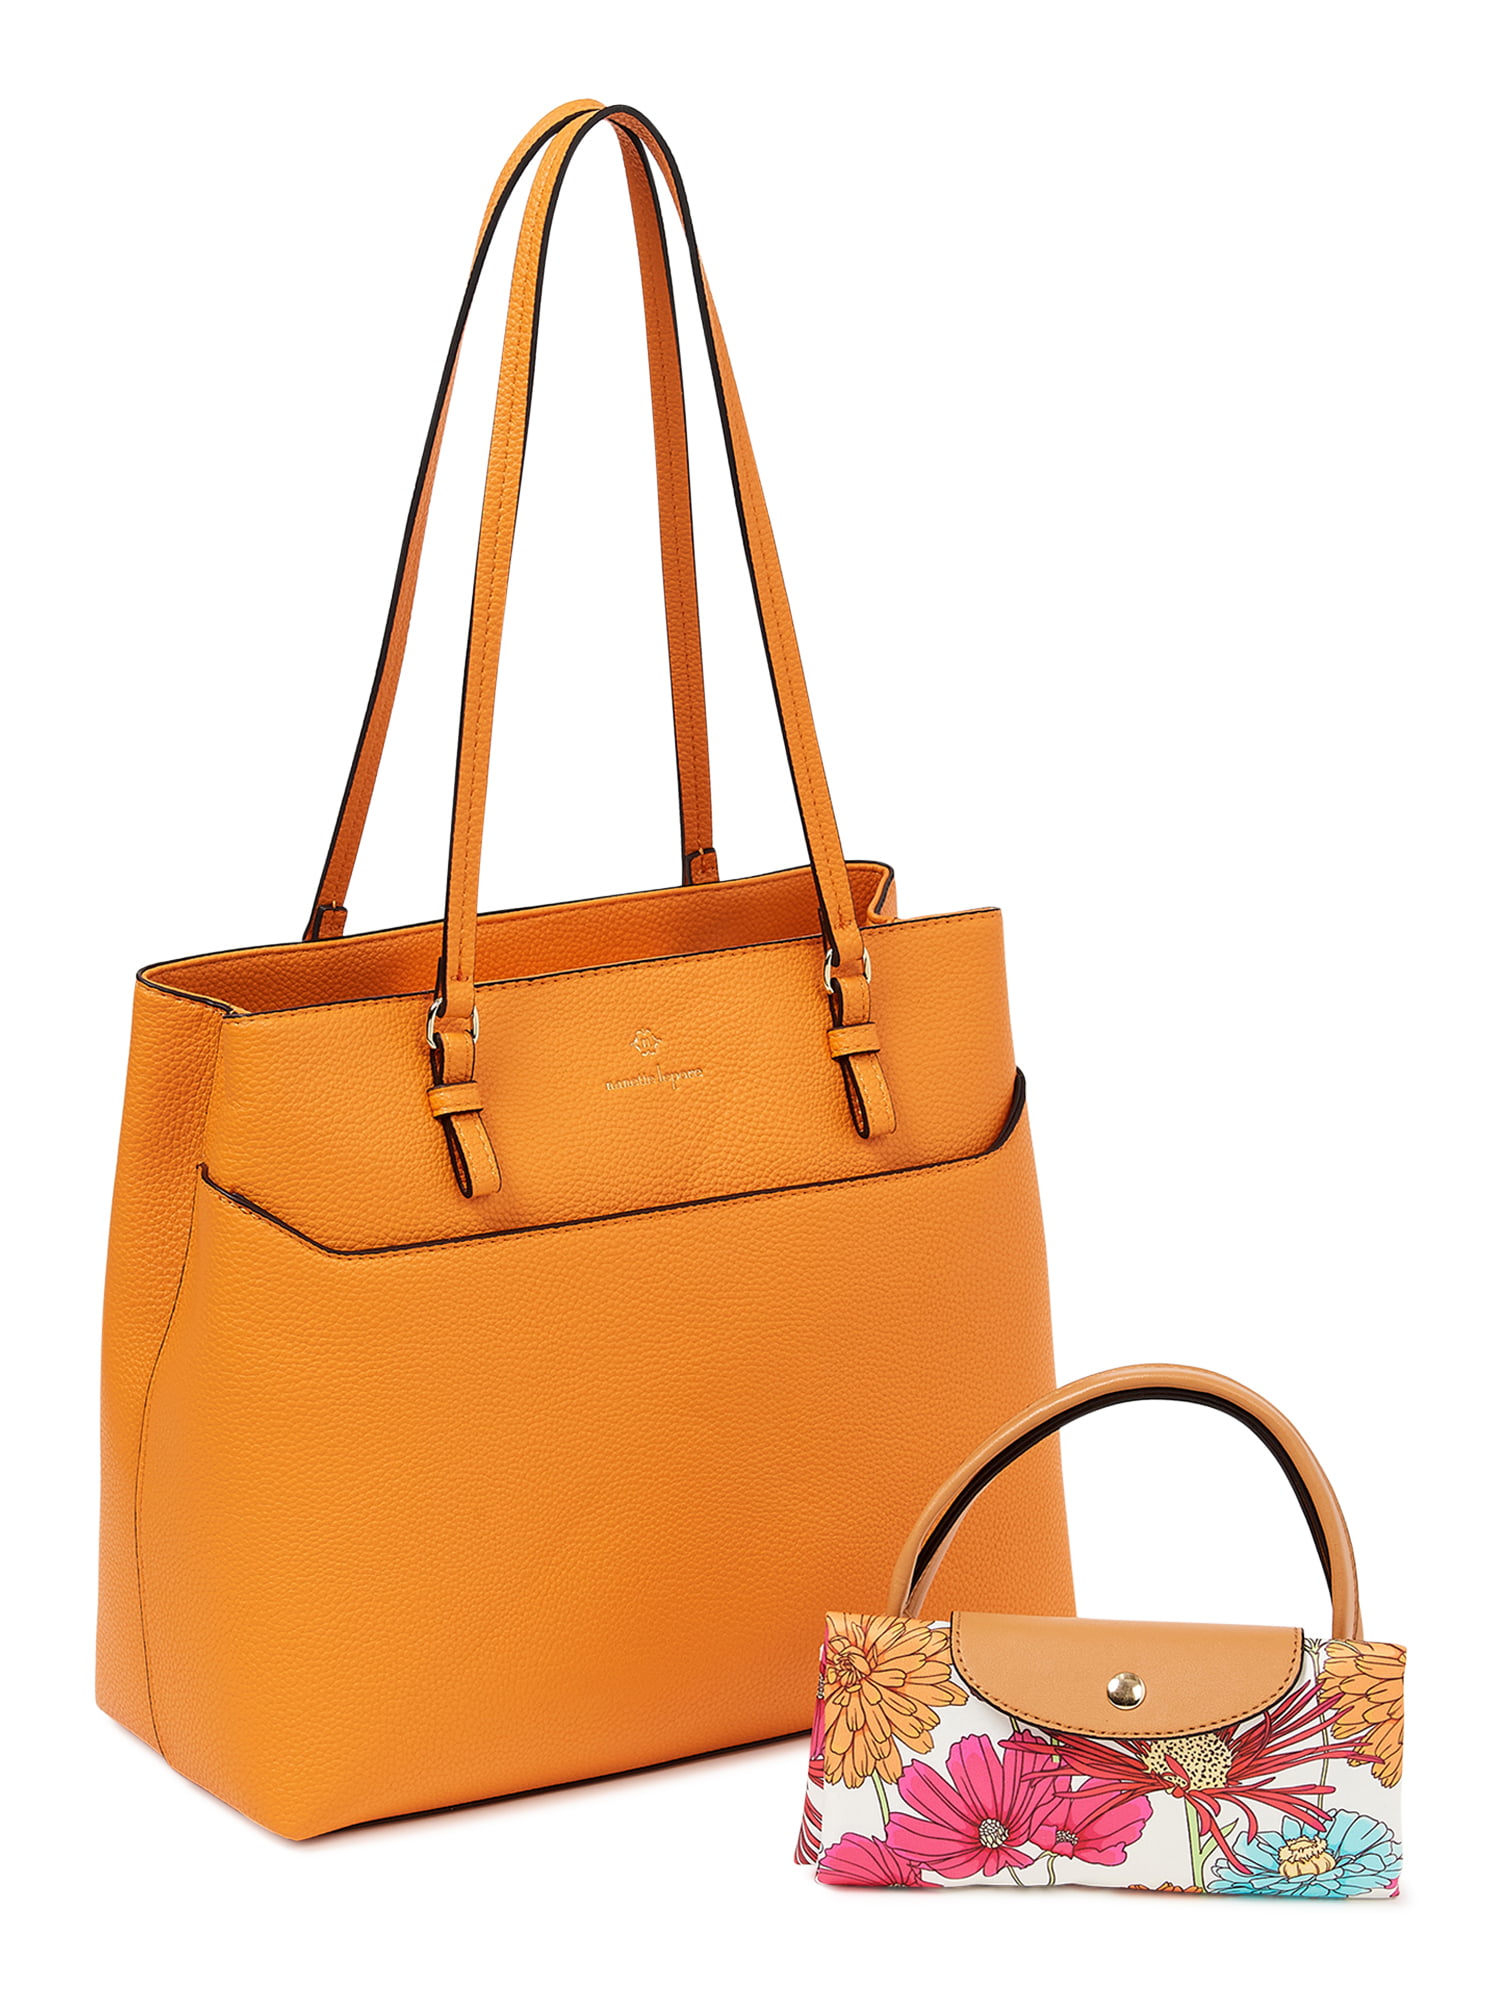 Handbag Bags Ladybug On Spring Flowers Work Woman Bag Men Tote Bag Pu Leather Top Handle Satchel Handbag 